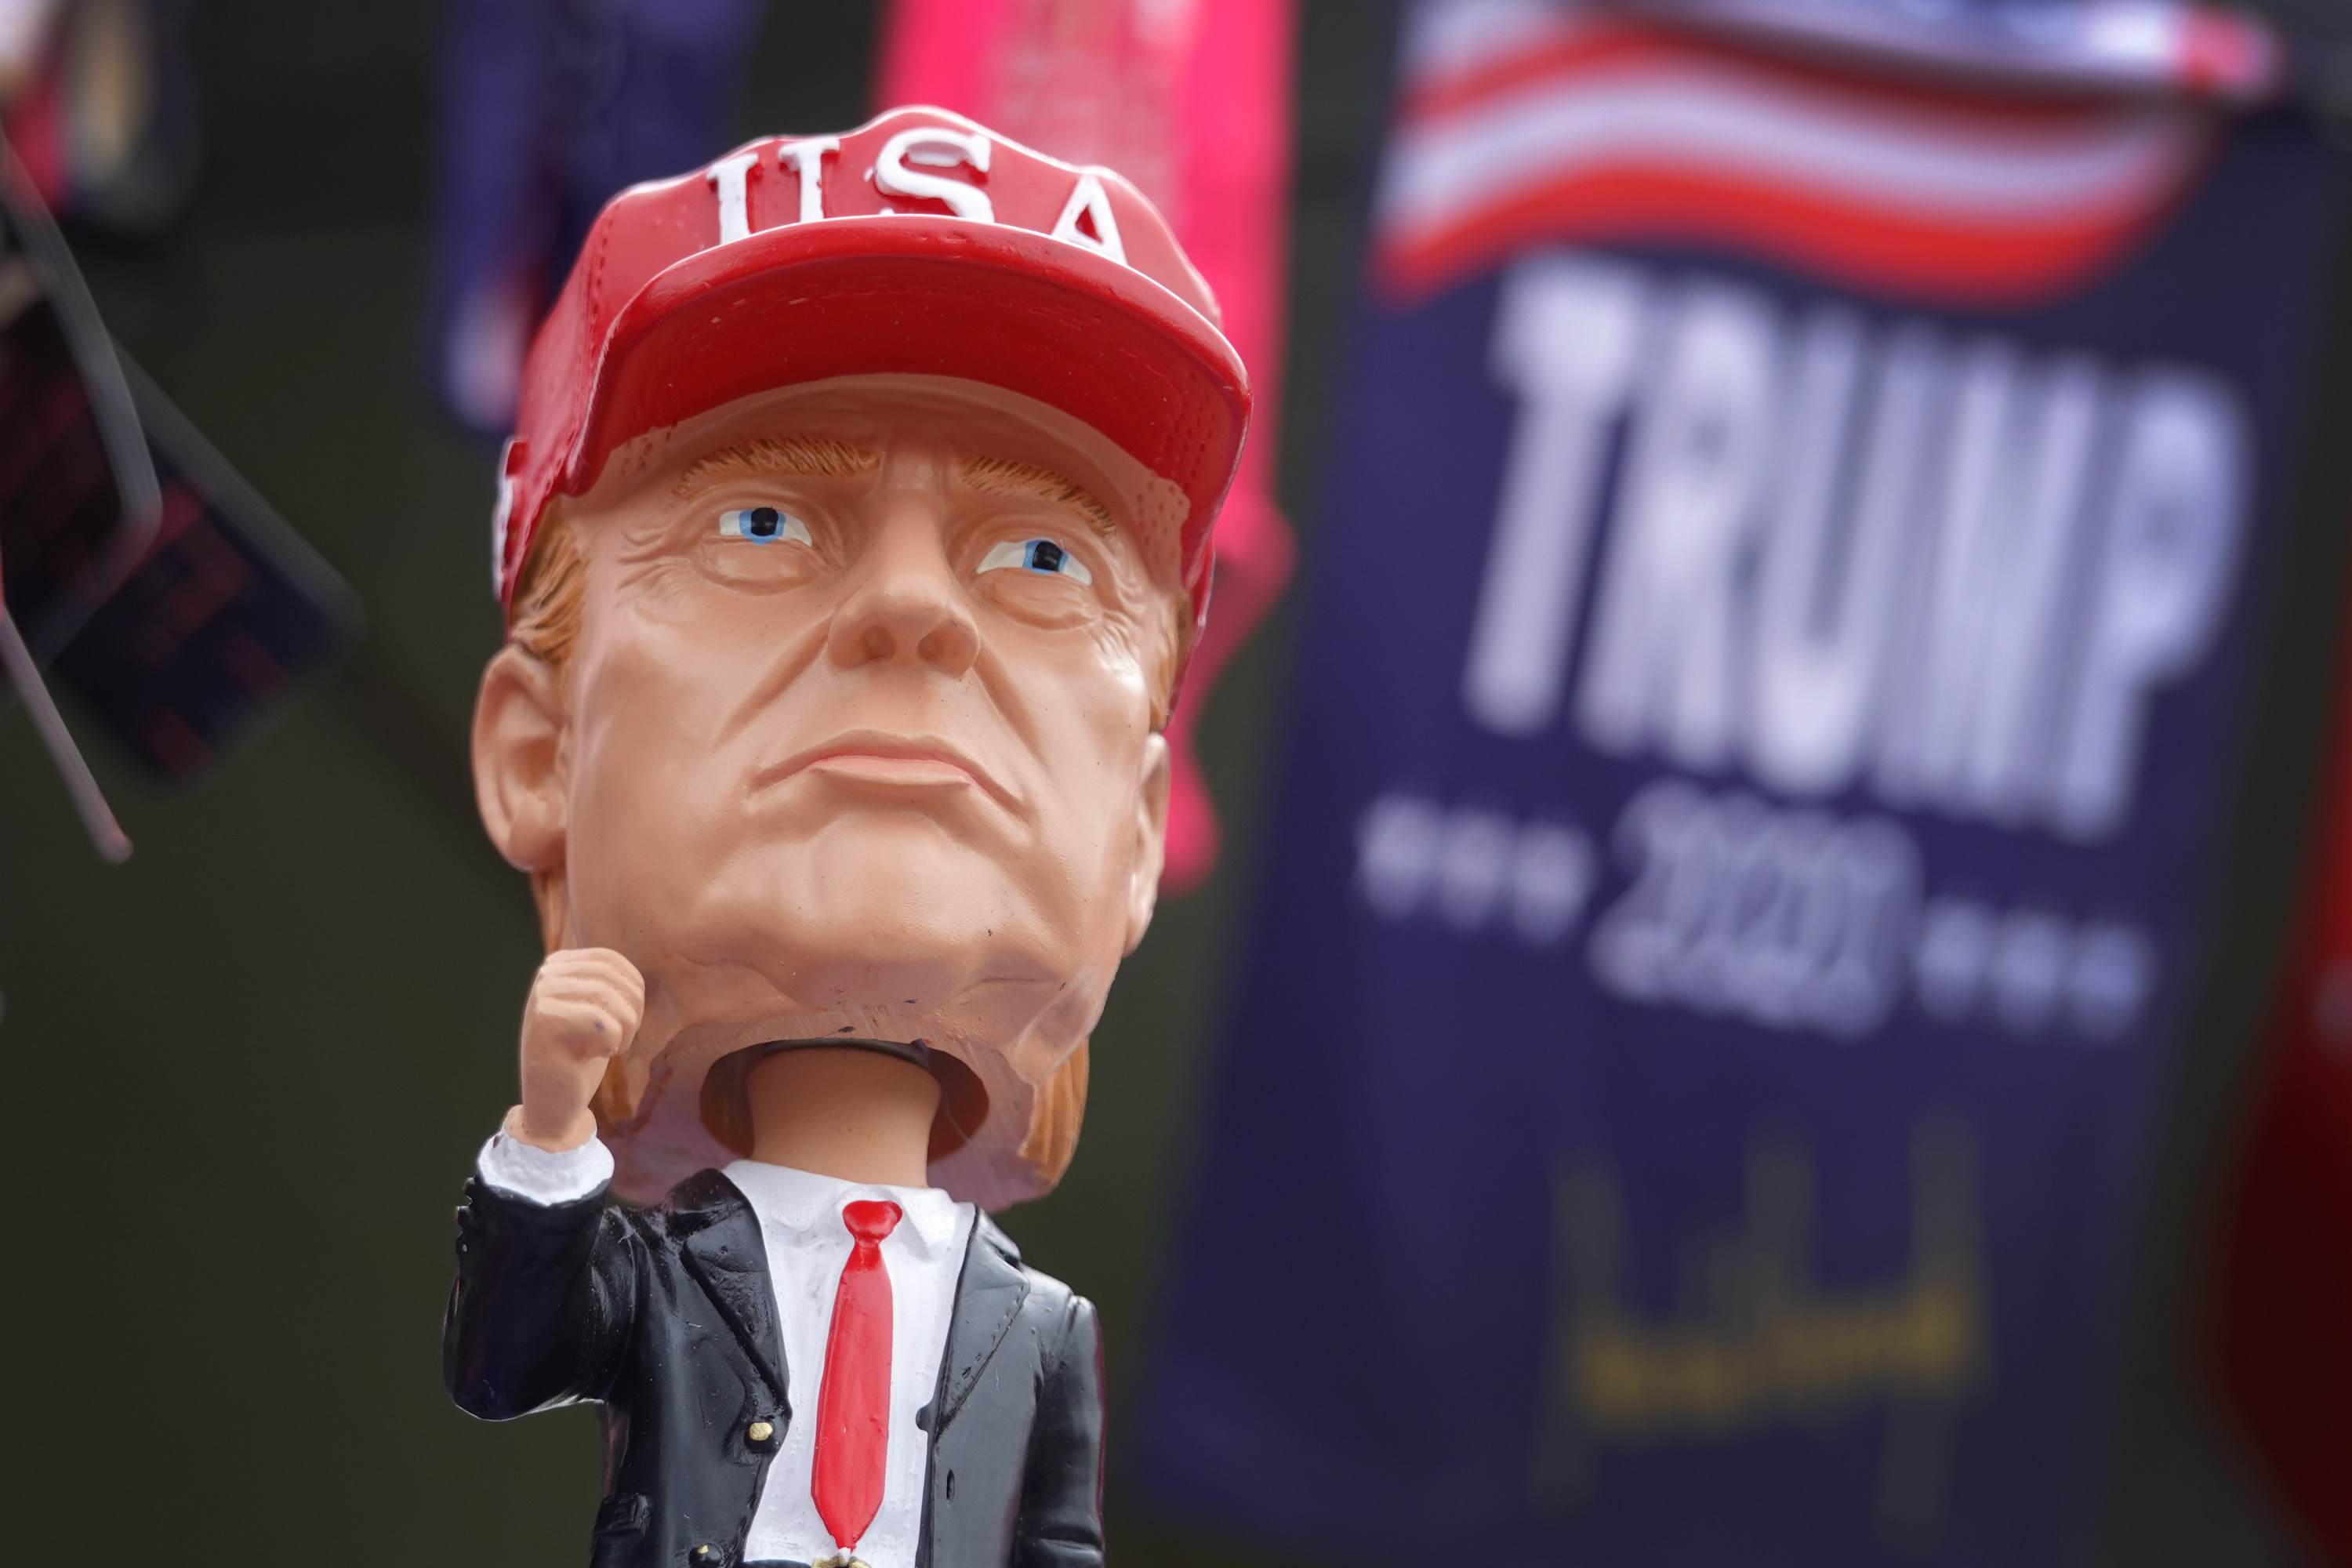 A Trump bobblehead wearing a USA cap.